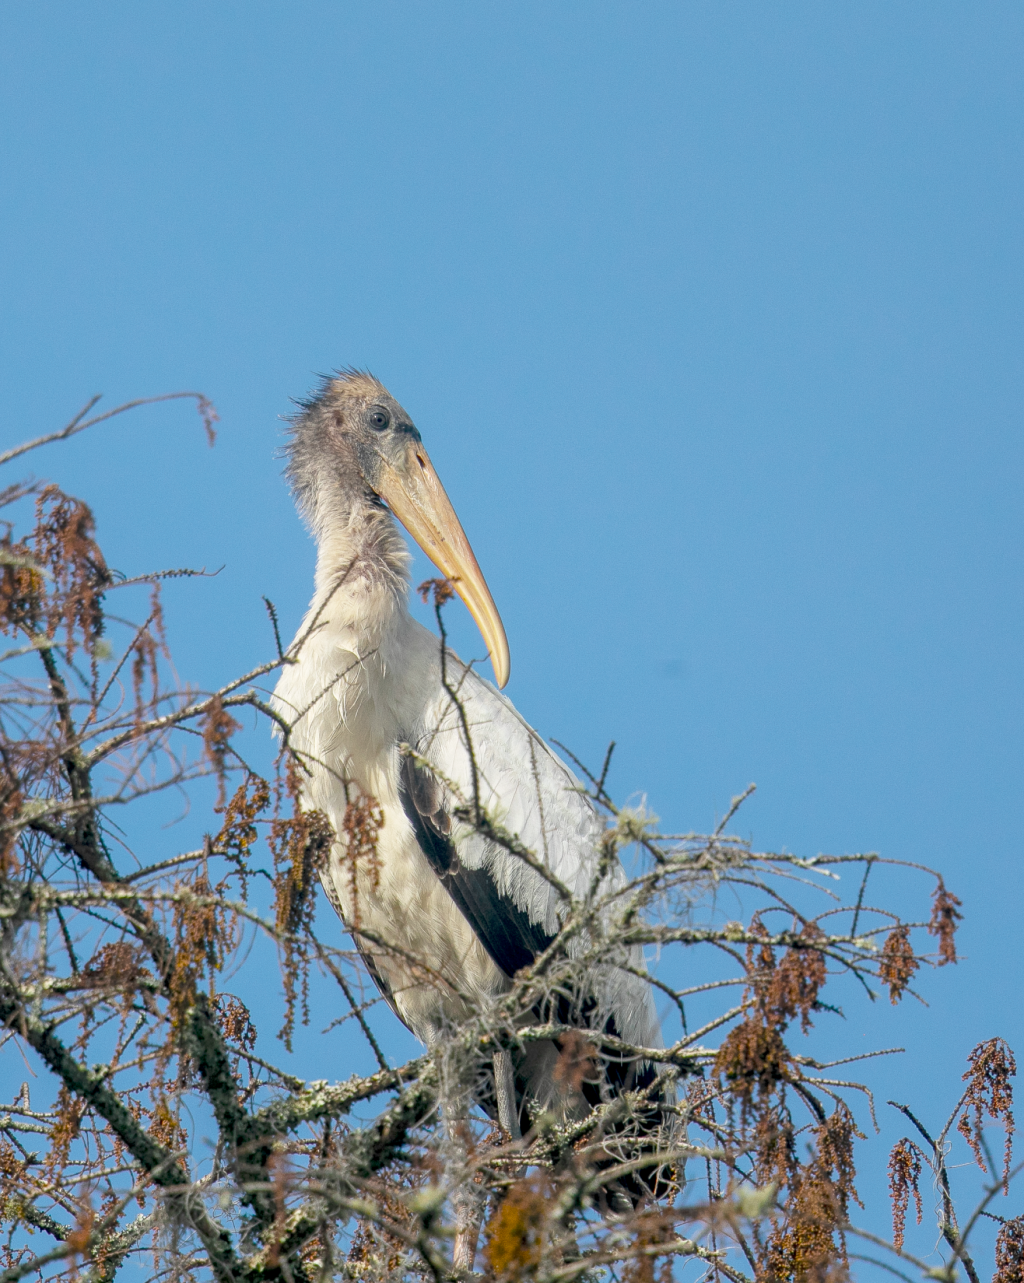 A wood stork perches in a barren tree in winter